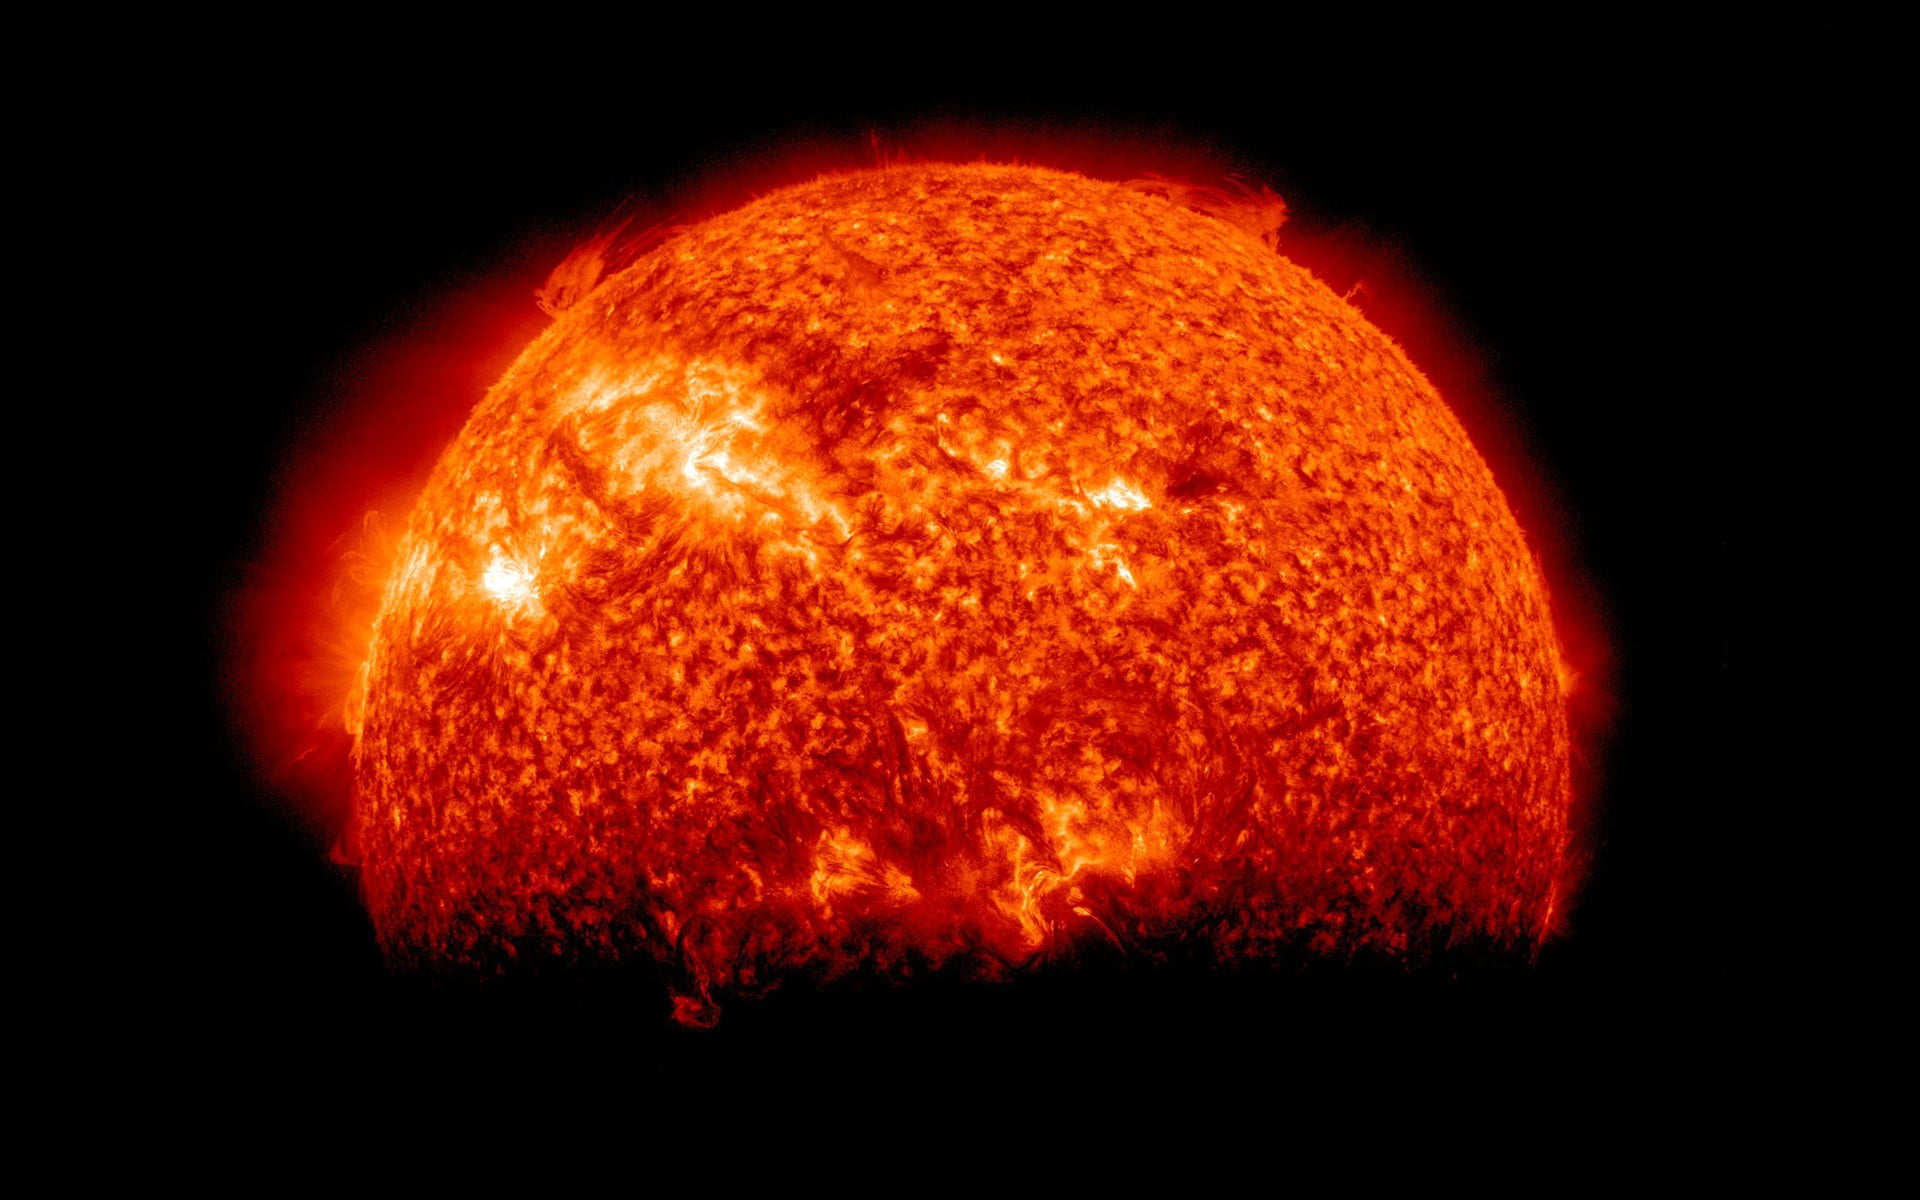 red solar system, Sun, space, stars, fire - Natural Phenomenon